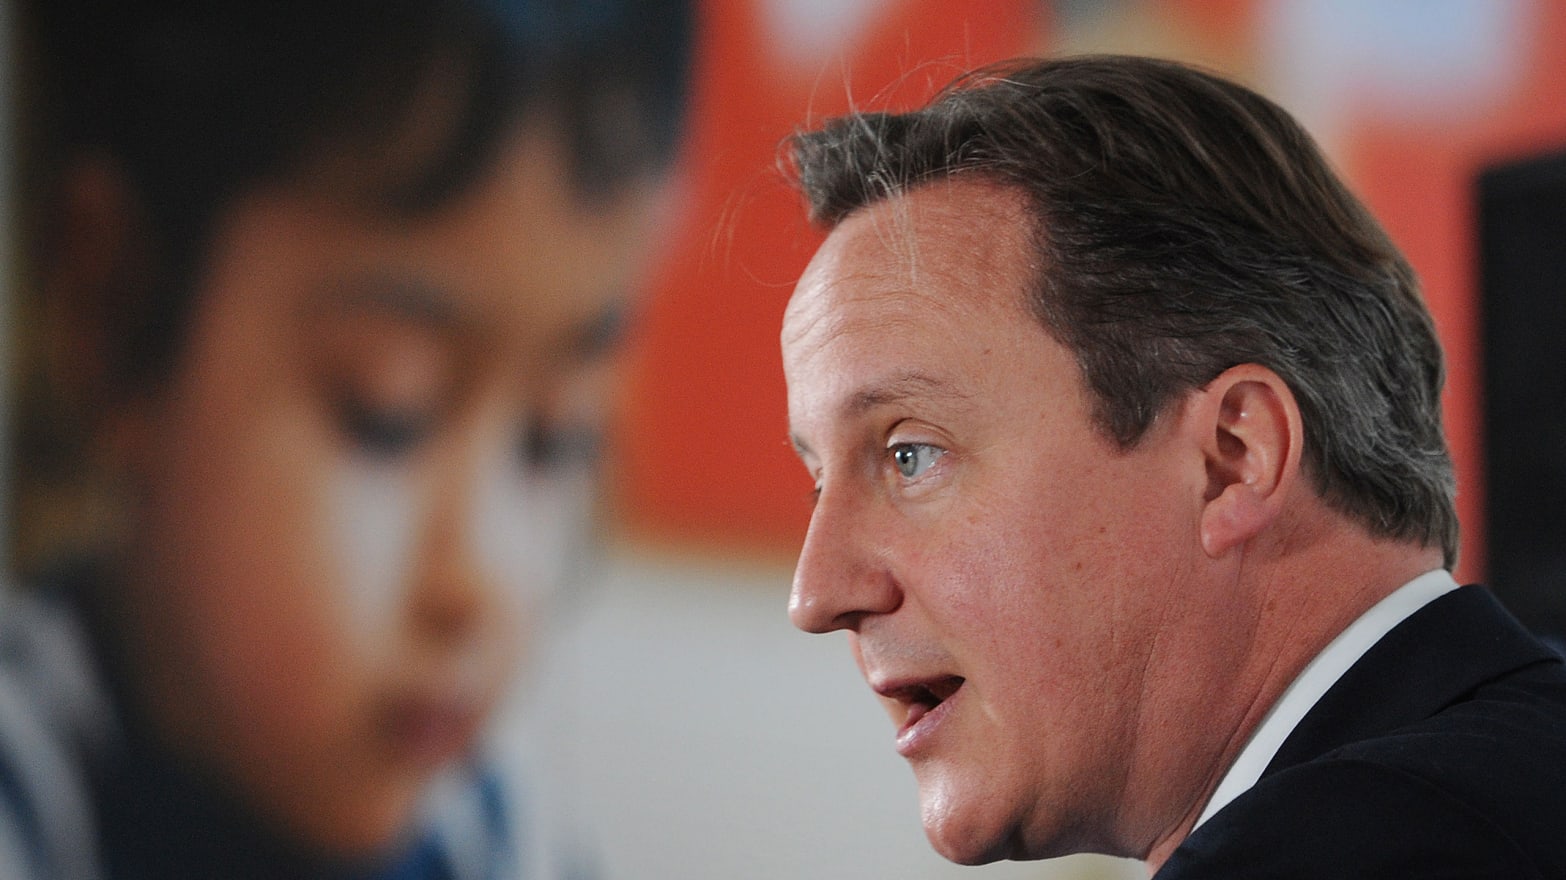 Prime Porn - British Prime Minister David Cameron's War on Porn